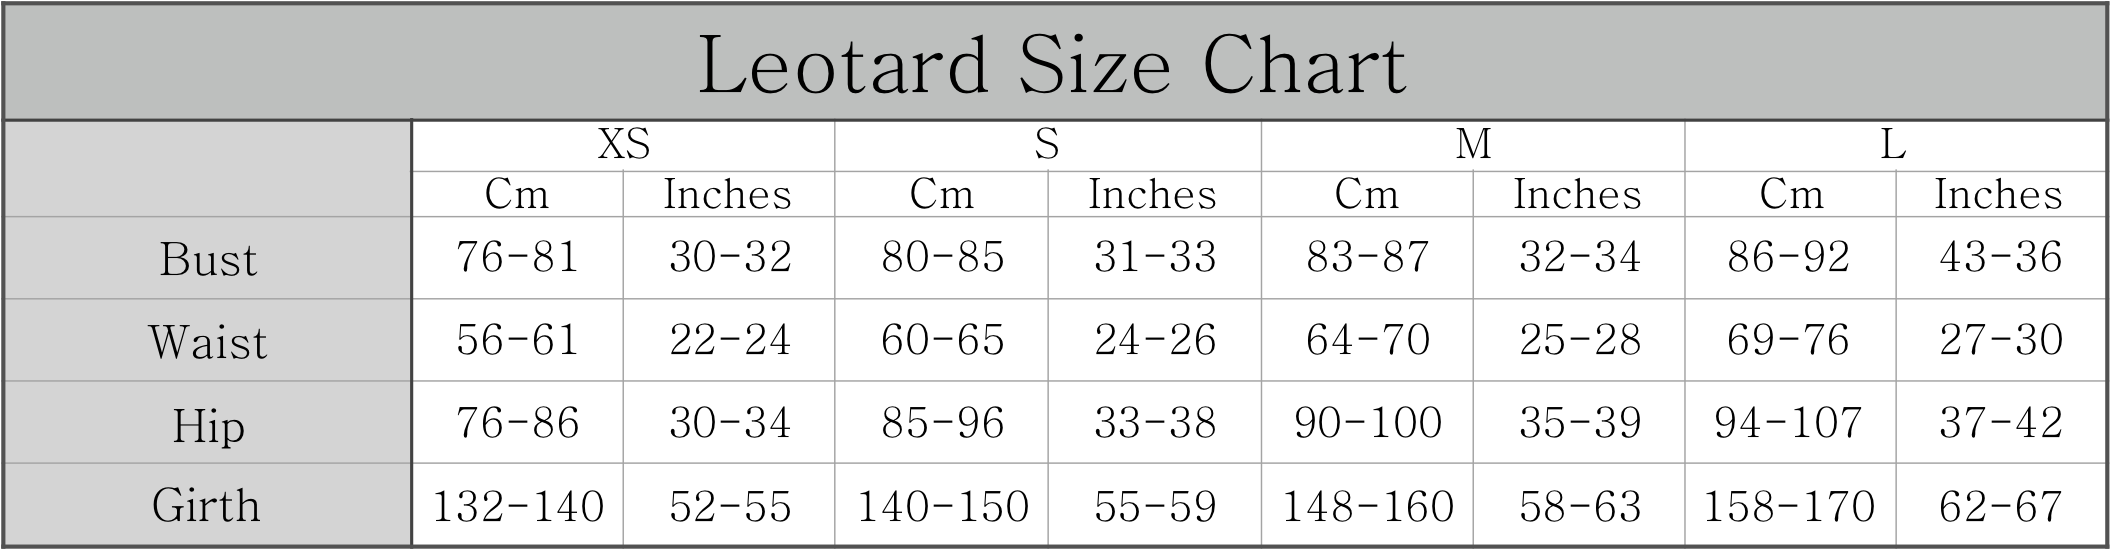 Leotard Size Chart - PNG